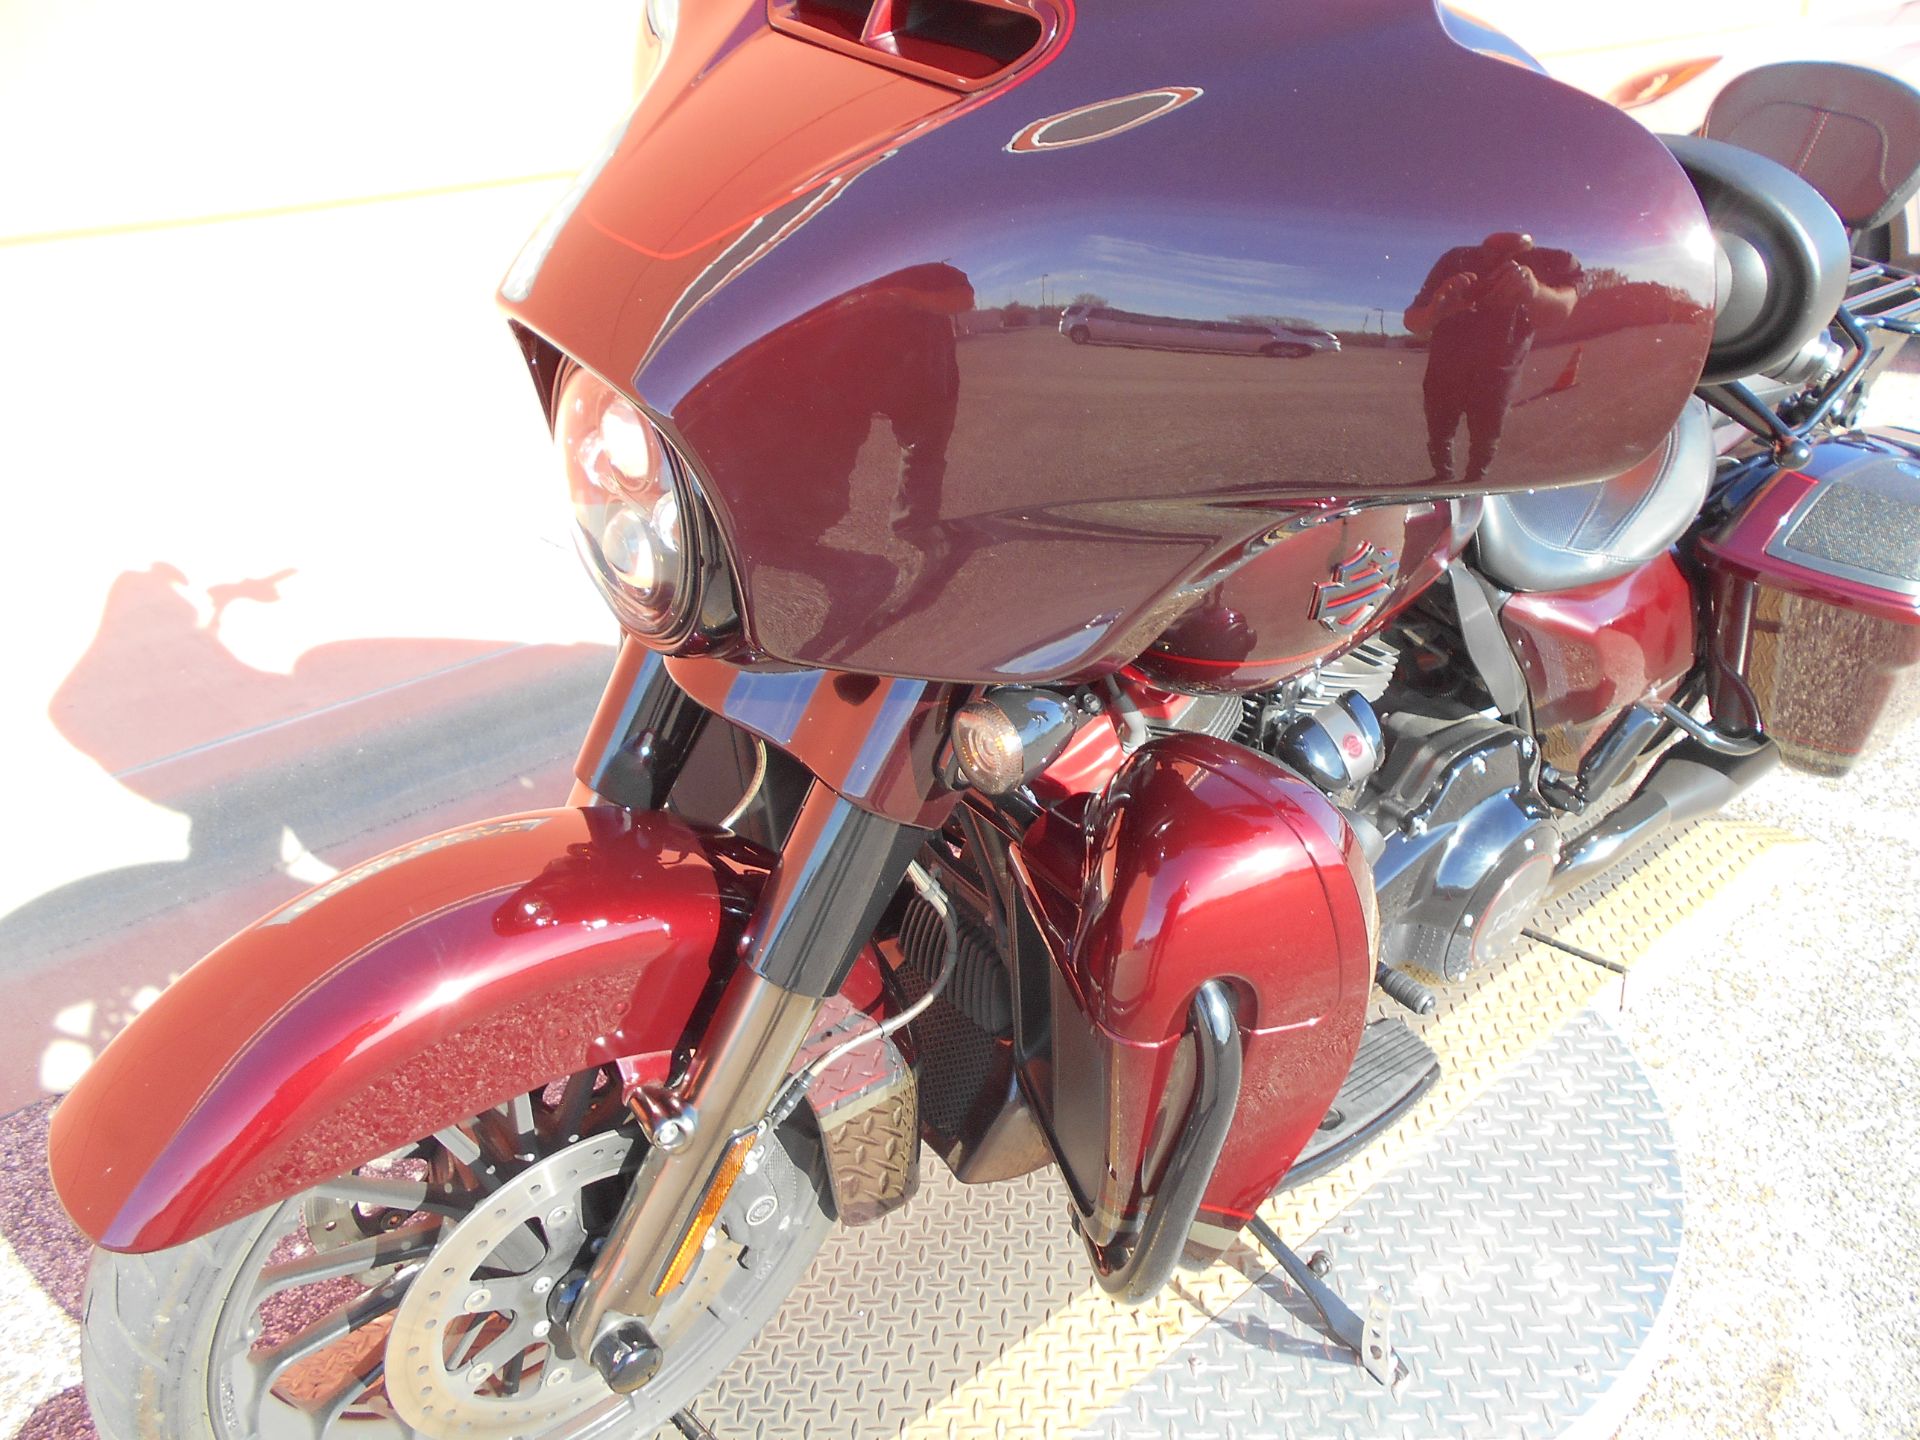 2019 Harley-Davidson CVO™ Street Glide® in Temple, Texas - Photo 18